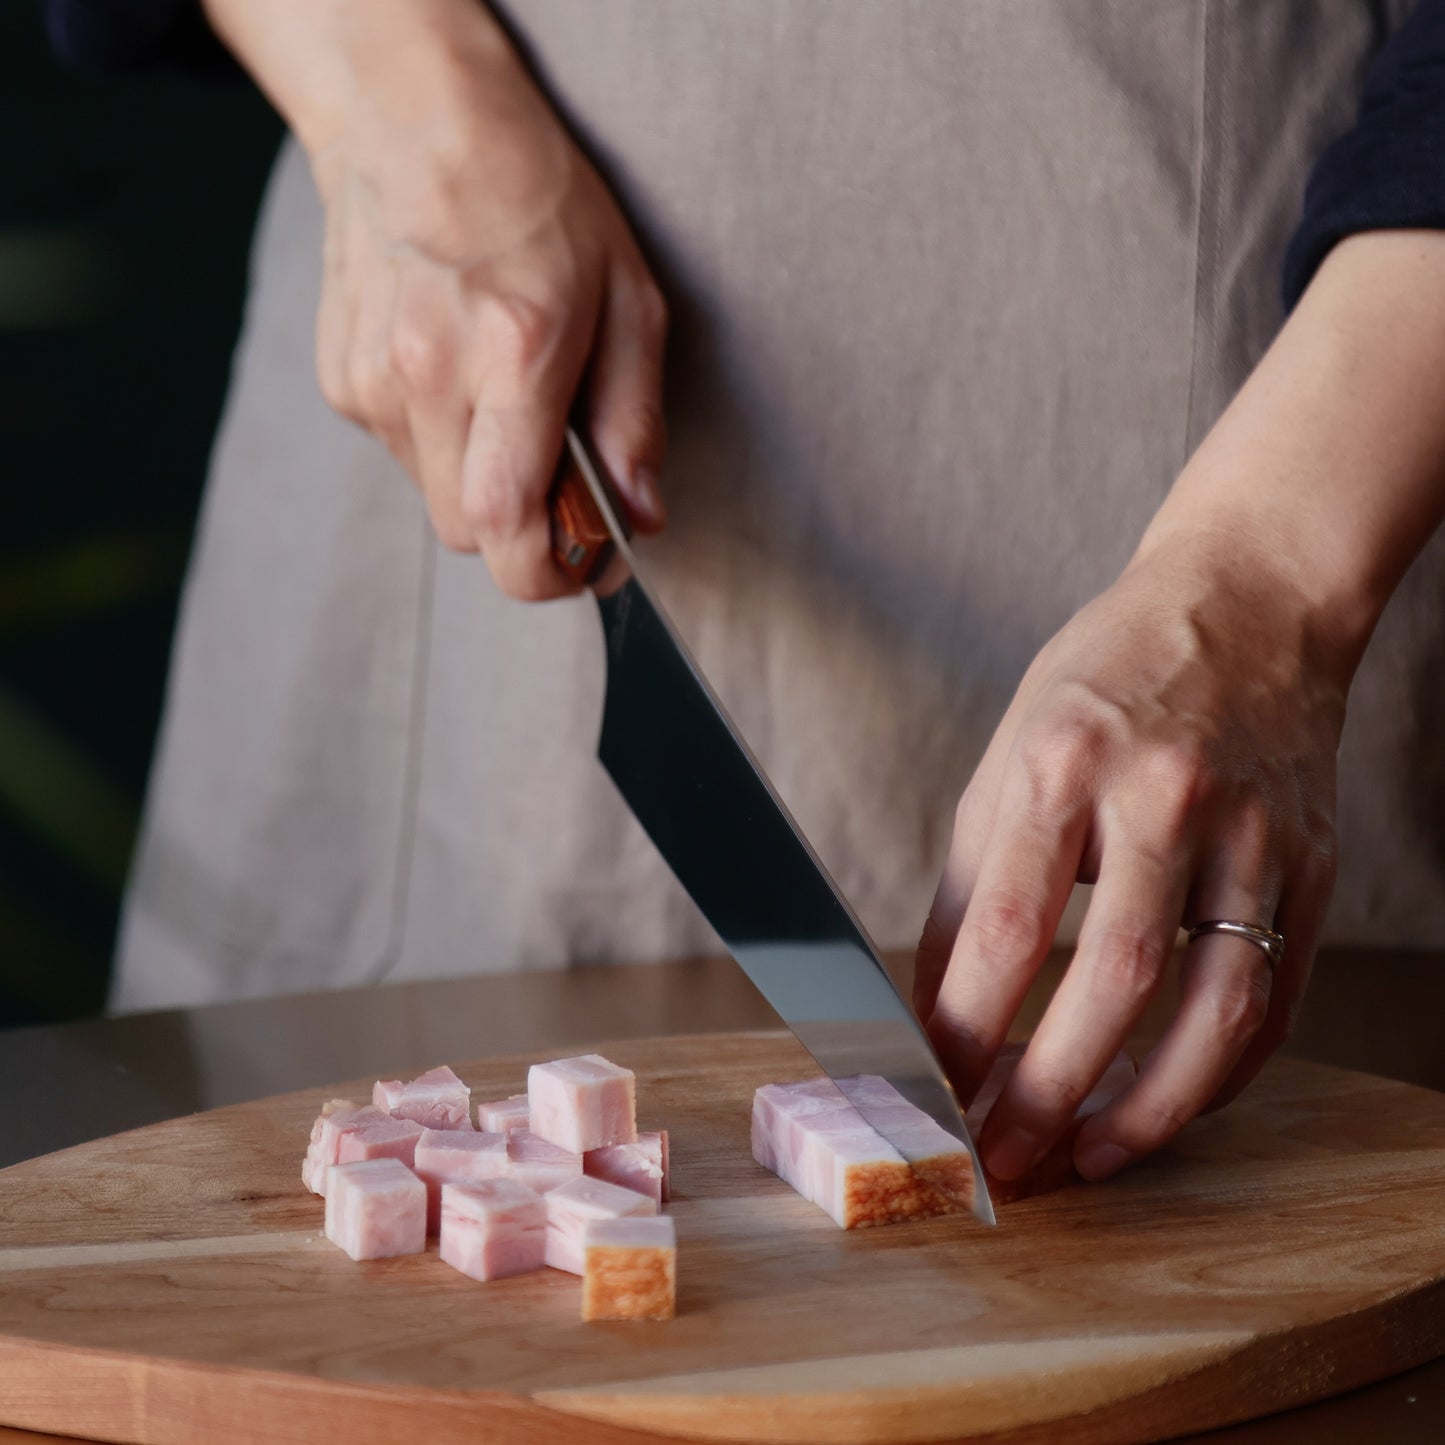 Nagomi Knife - Chef